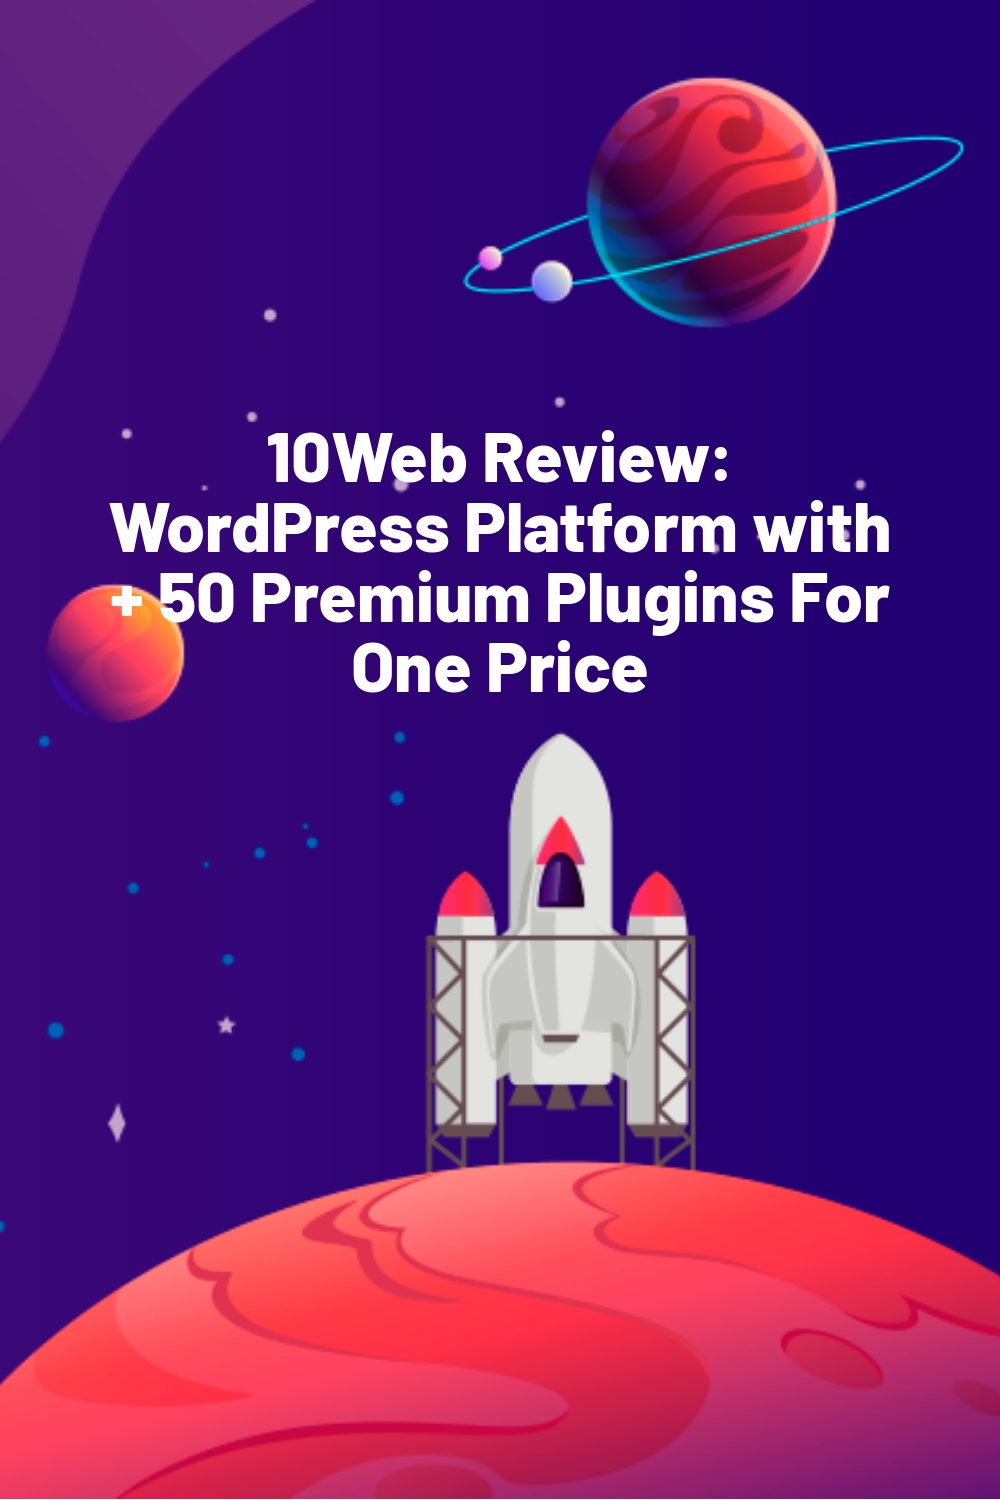 10Web Review: WordPress Platform with + 50 Premium Plugins For One Price